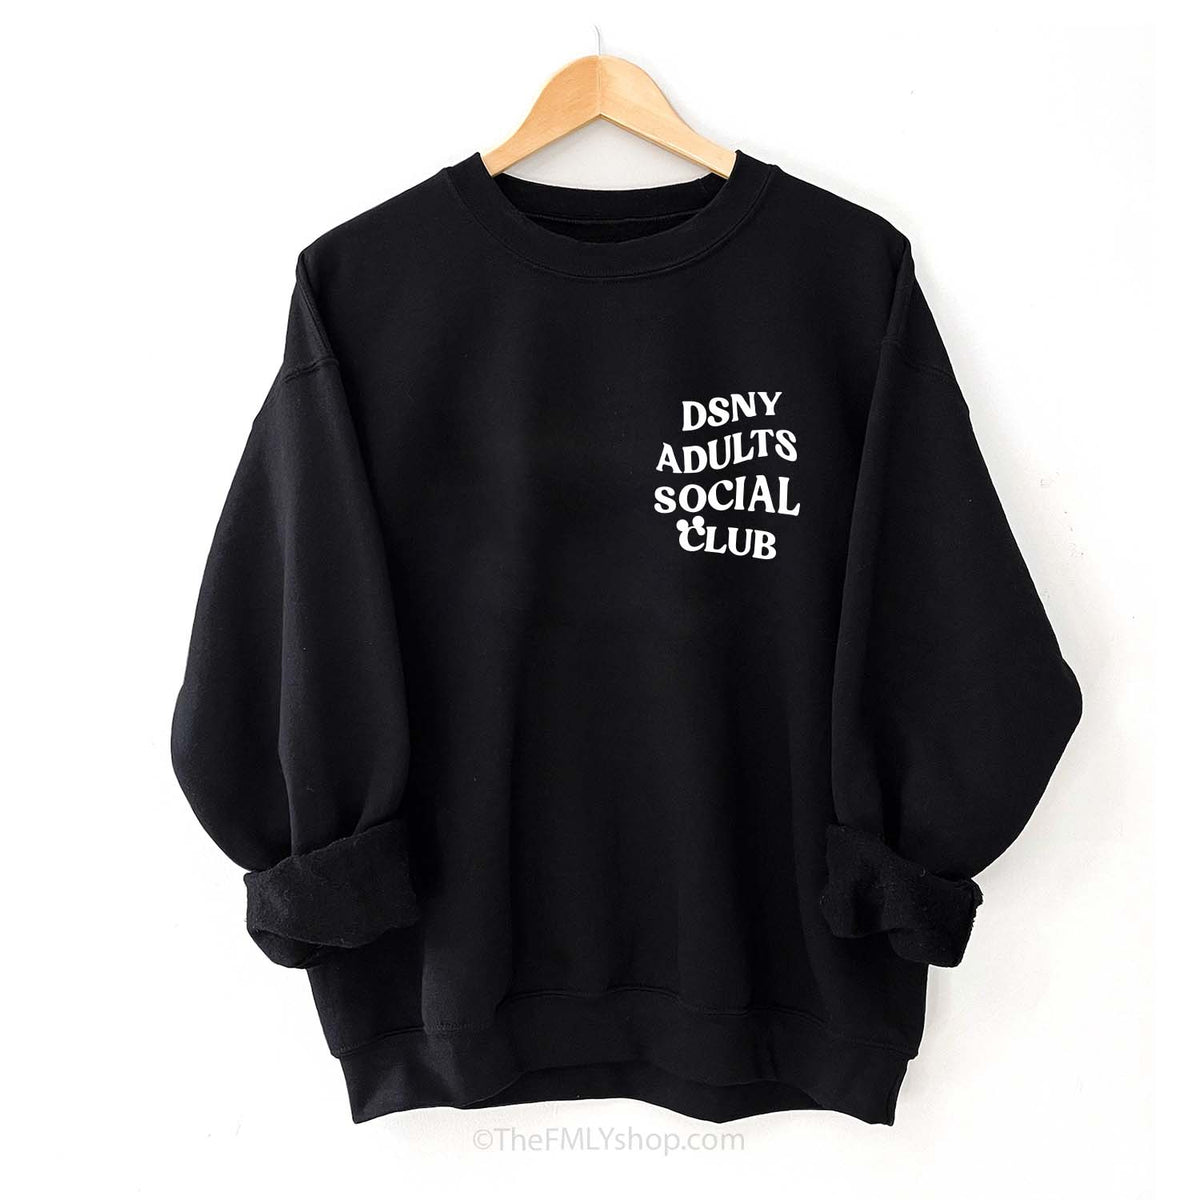 DSNY Adults Social Club Sweatshirt